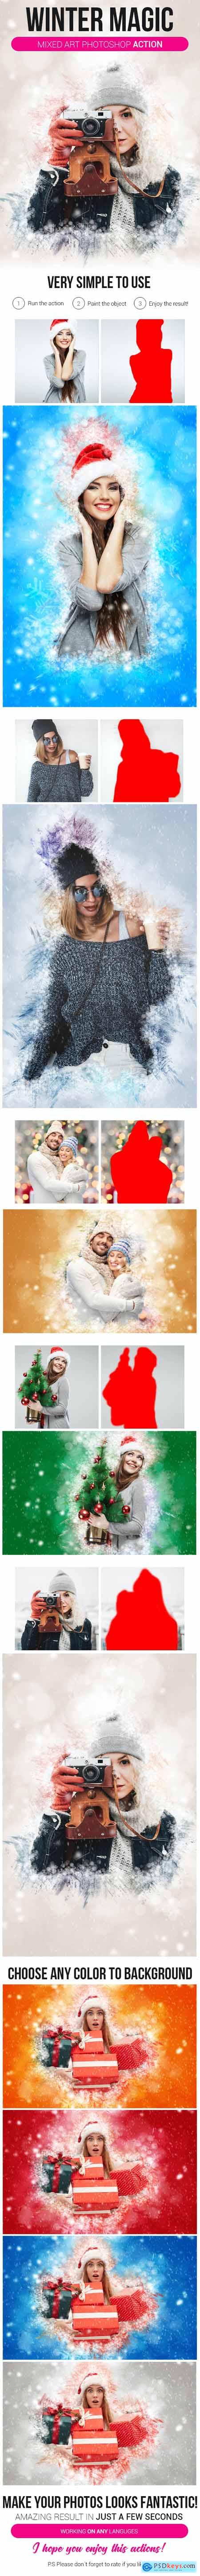 Winter Magic Mixed Art Photoshop Action 21156130